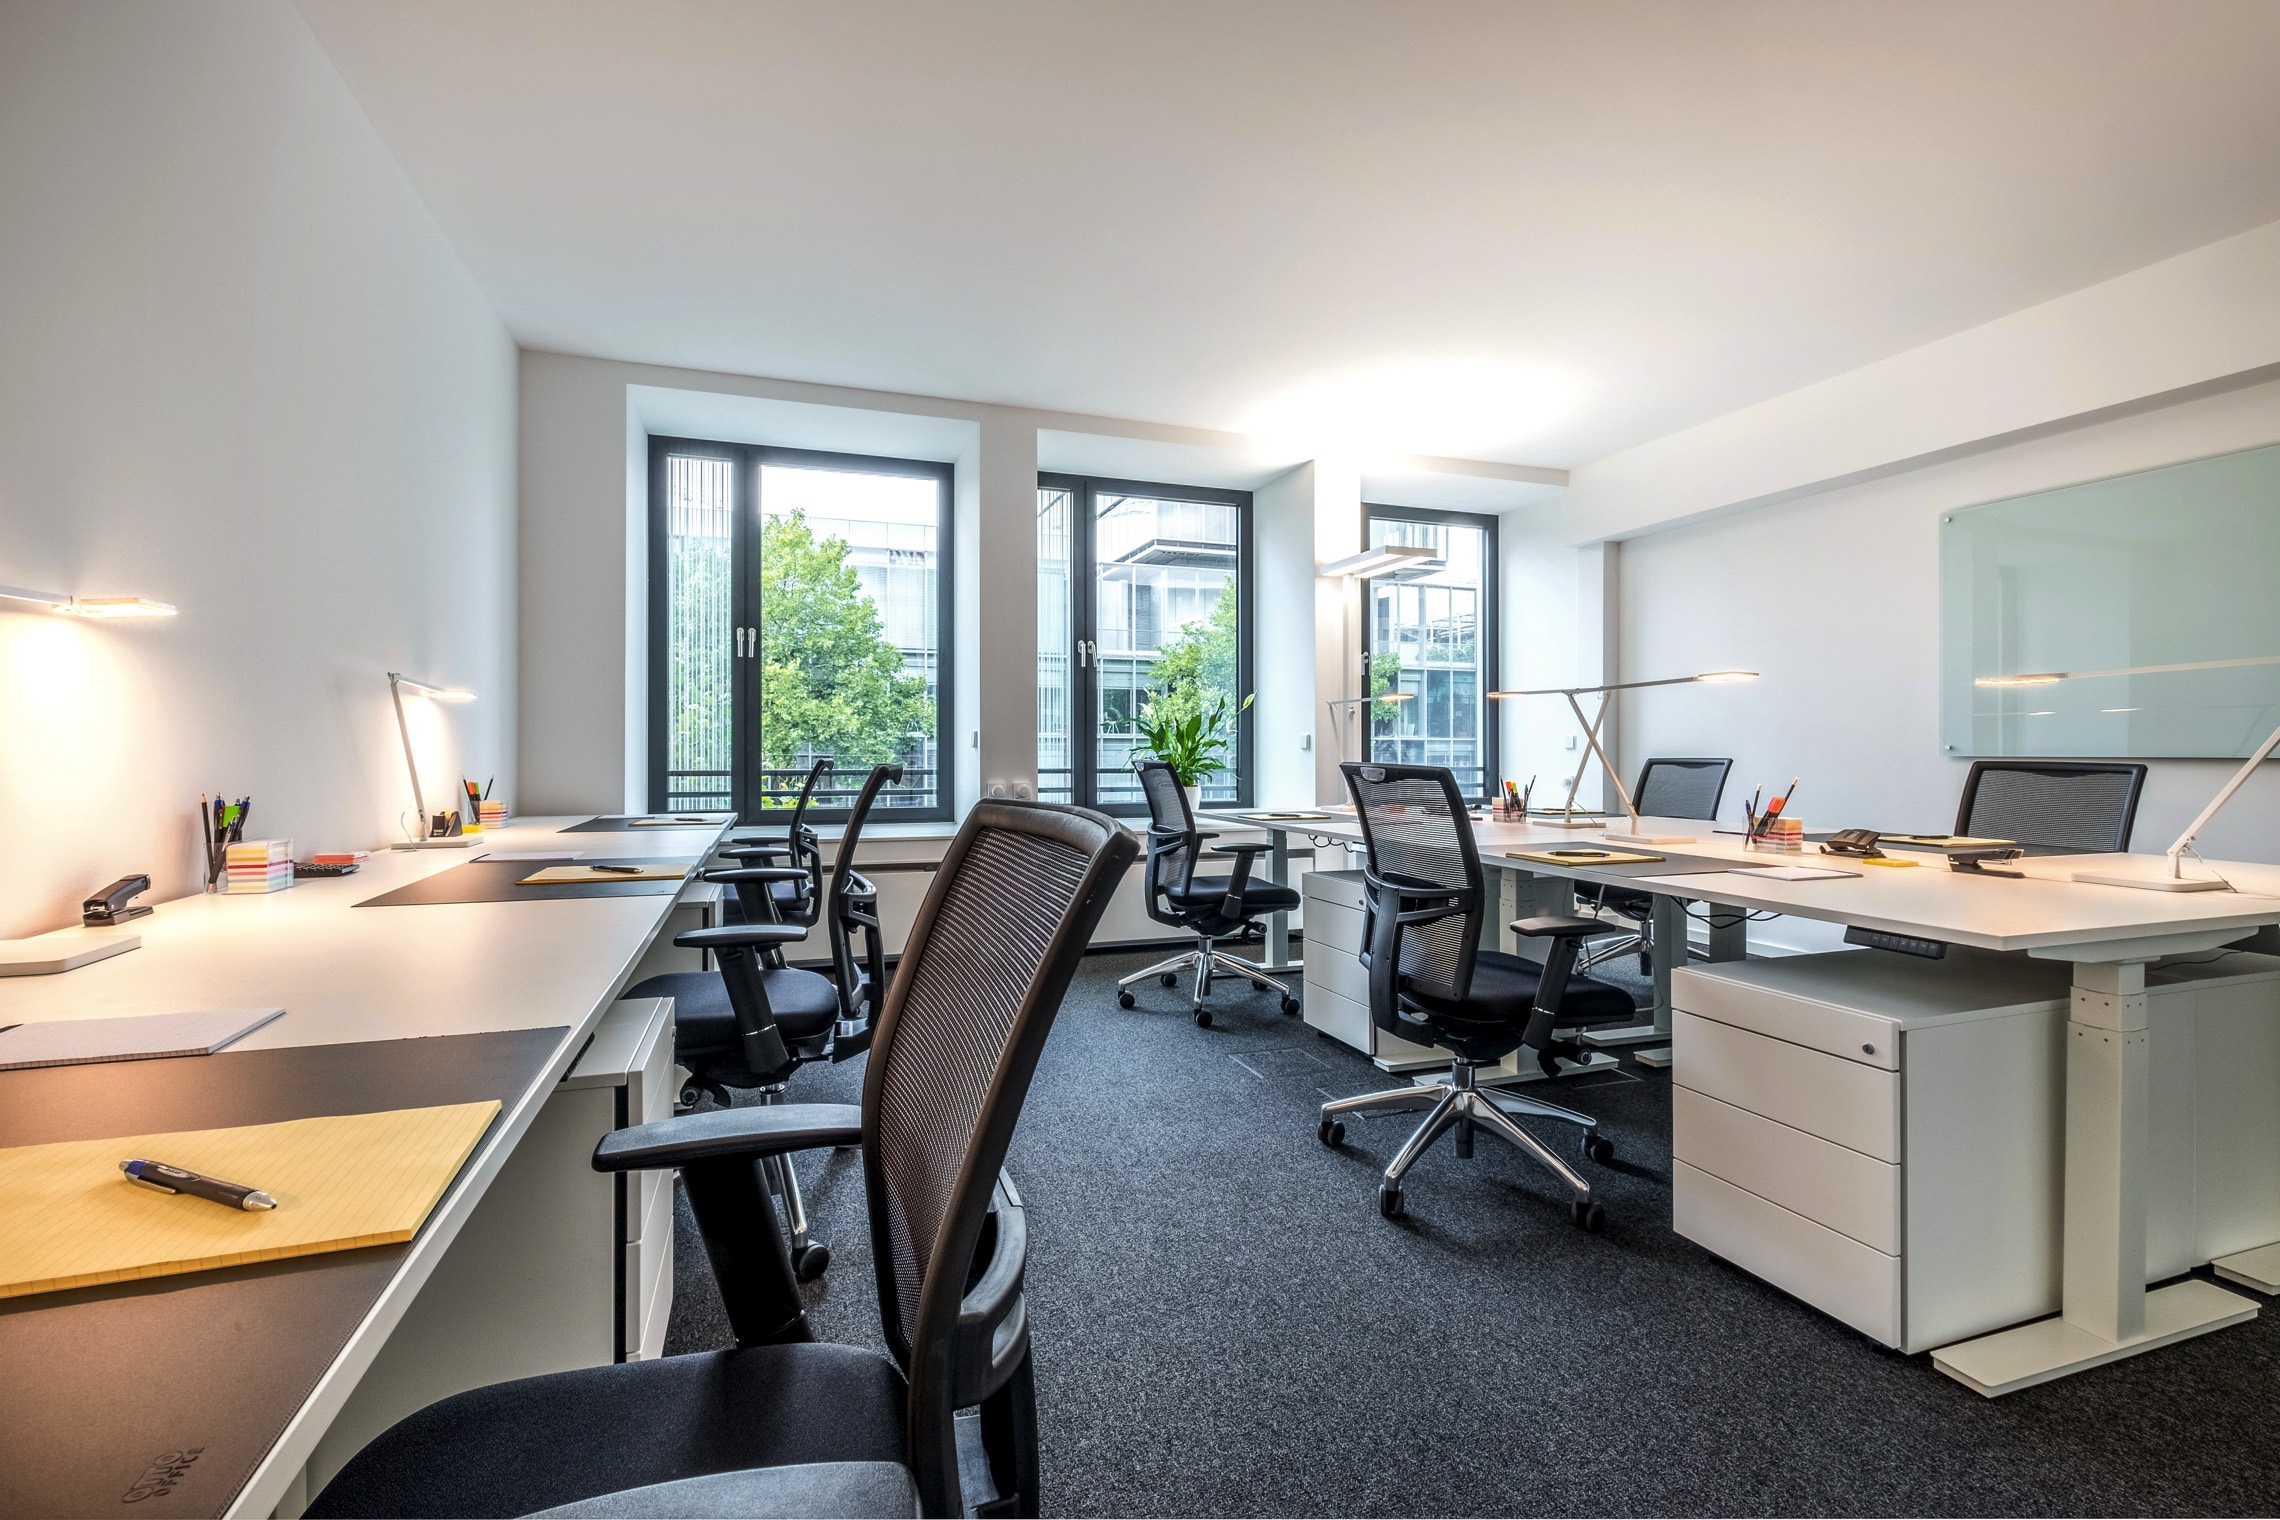 Modern working environment in the heart of Düsseldorf - Office Inspiration